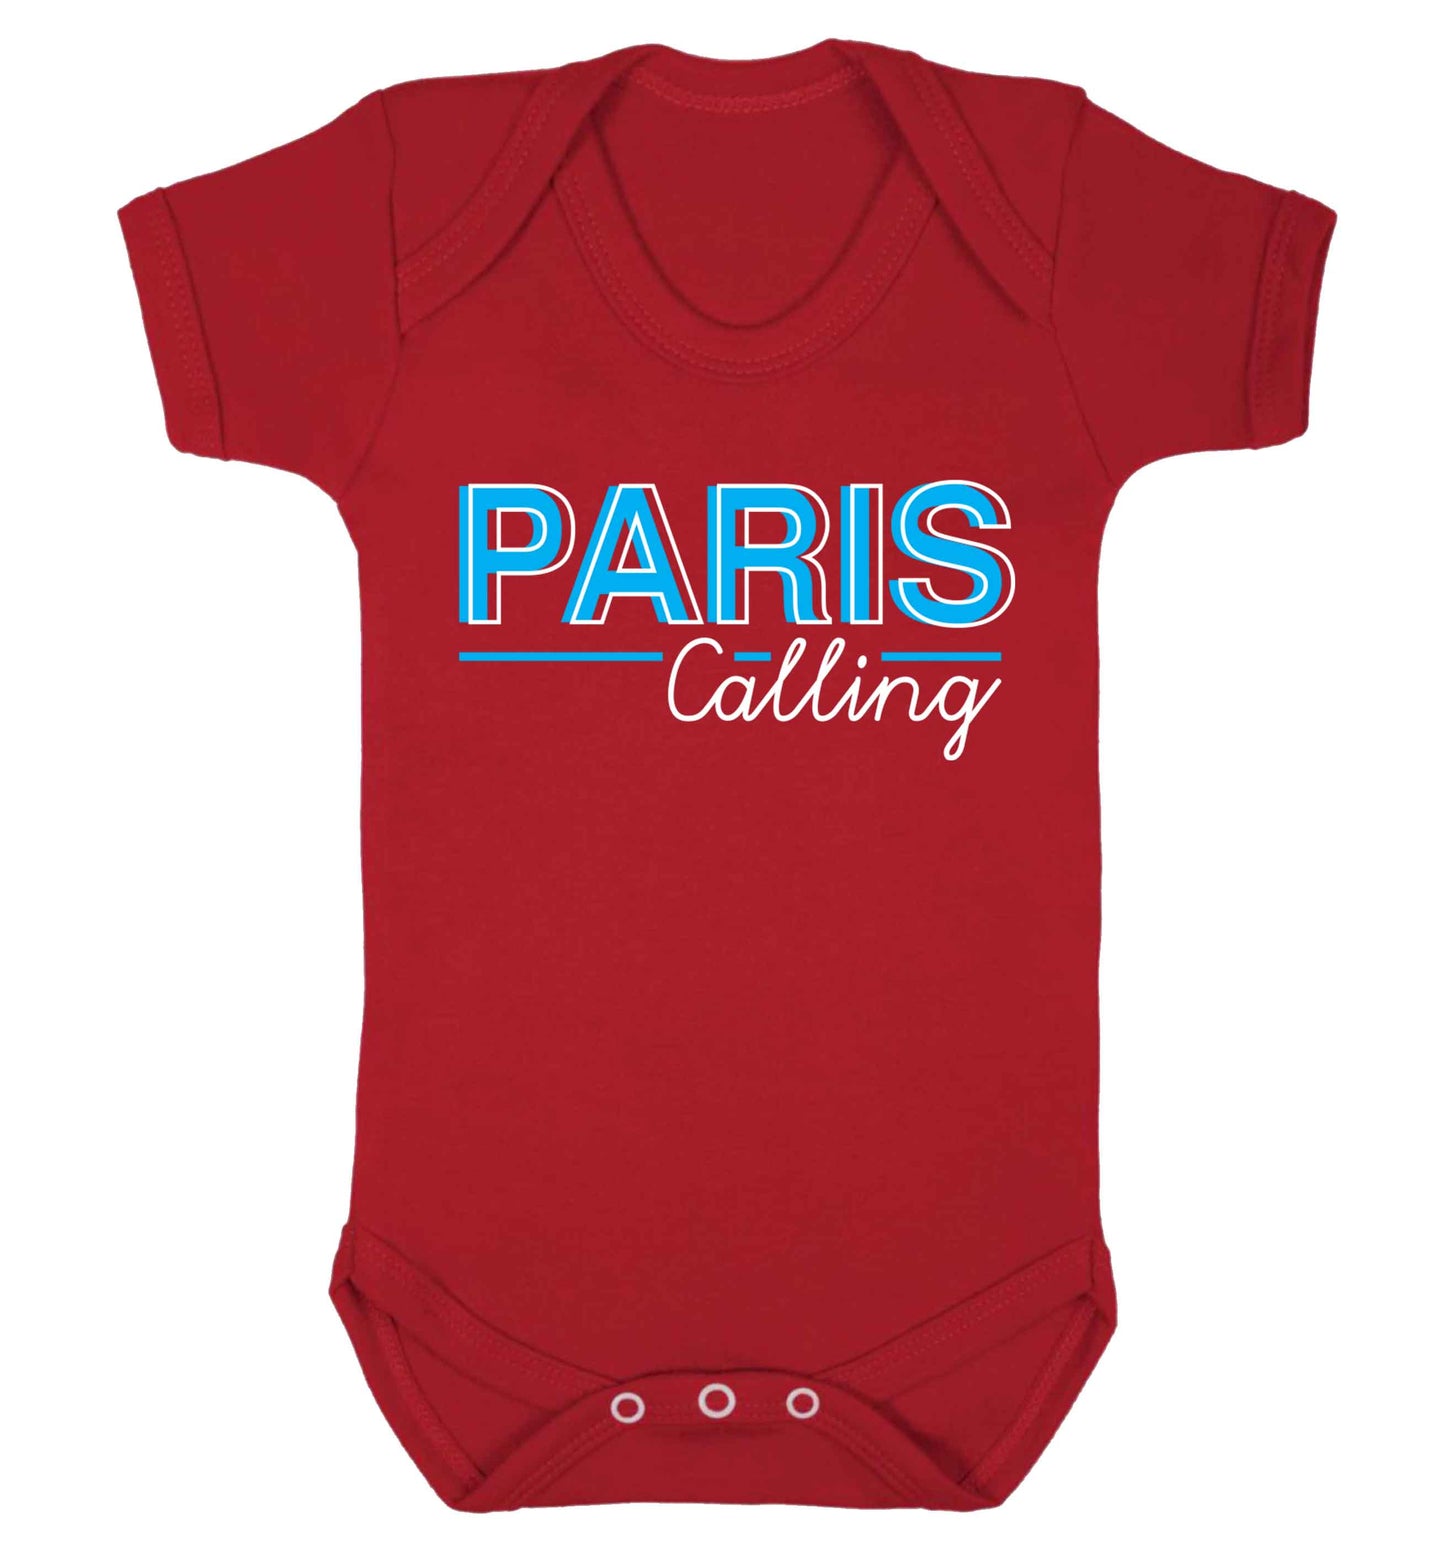 Paris calling Baby Vest red 18-24 months